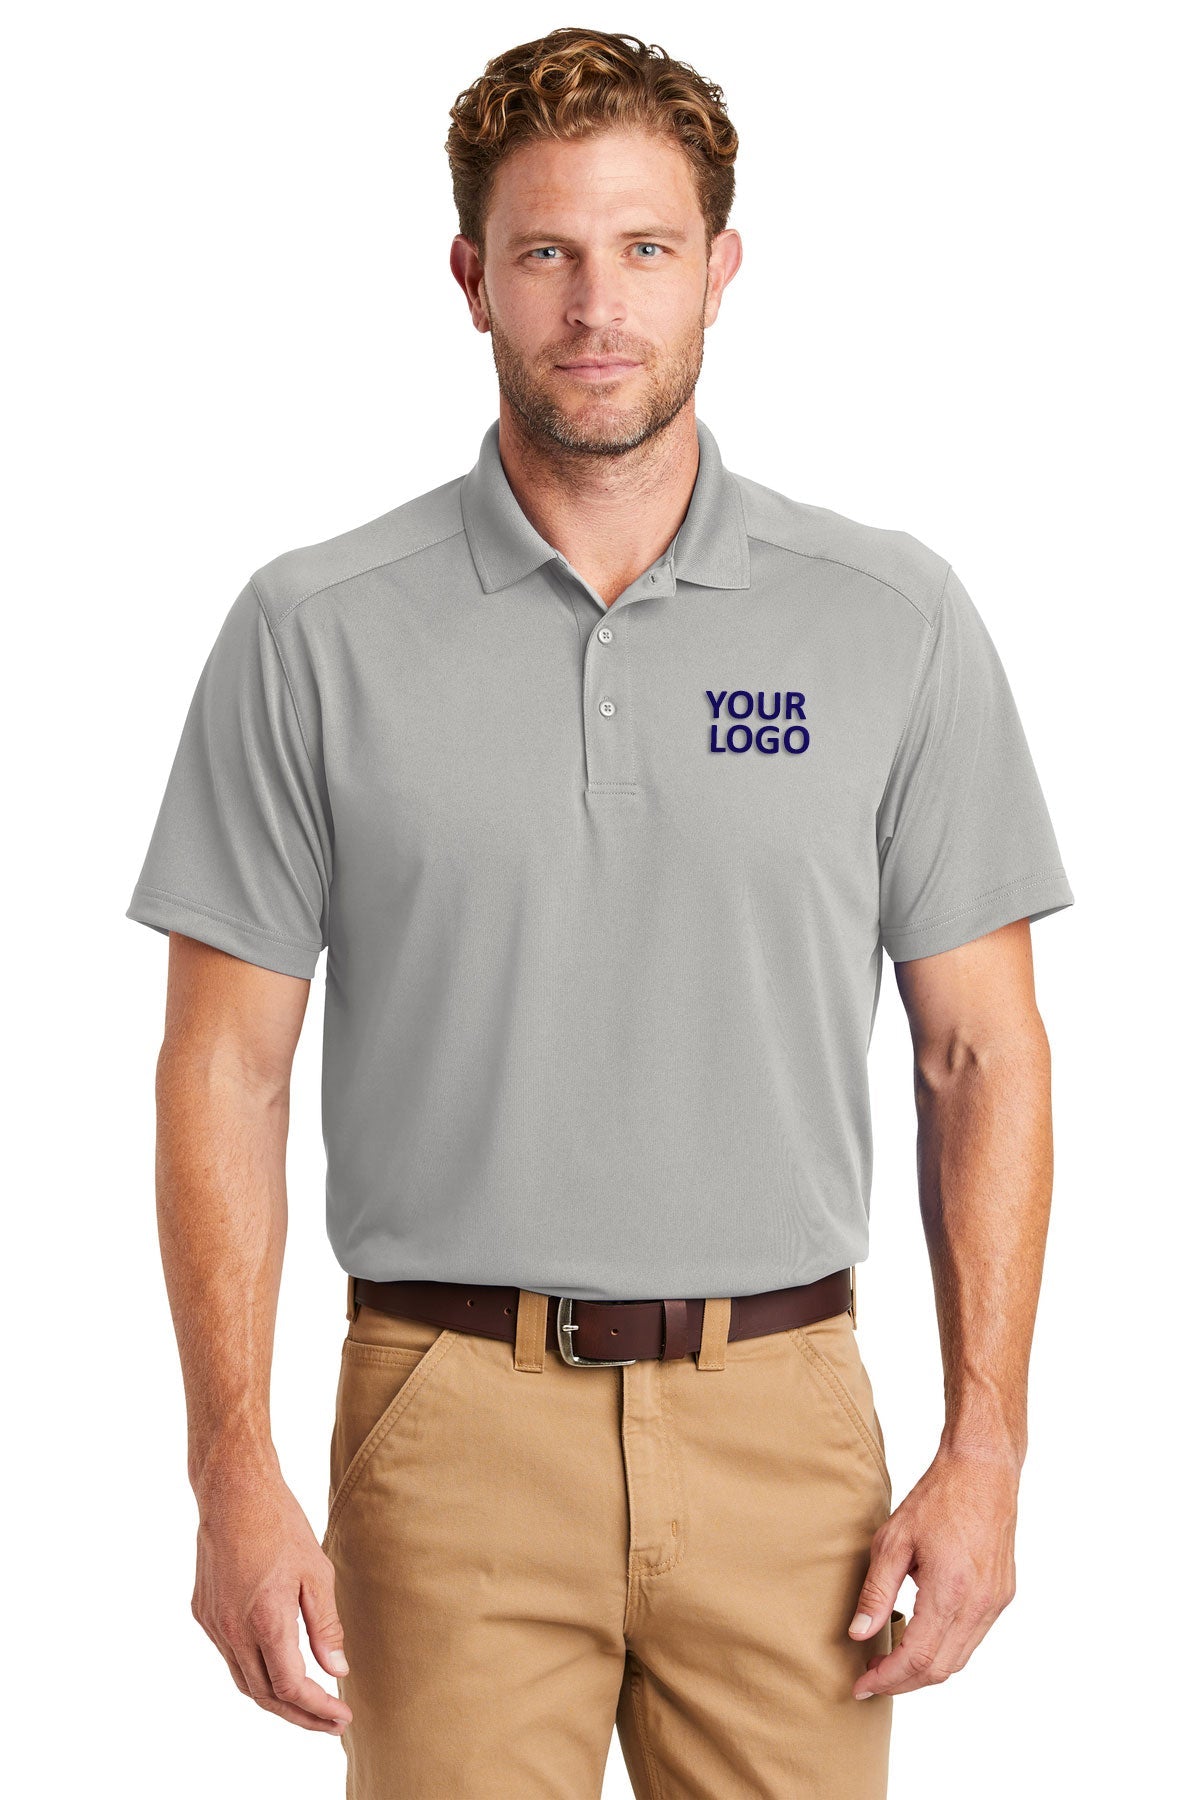 CornerStone Light Grey CS418 custom polo shirts for business